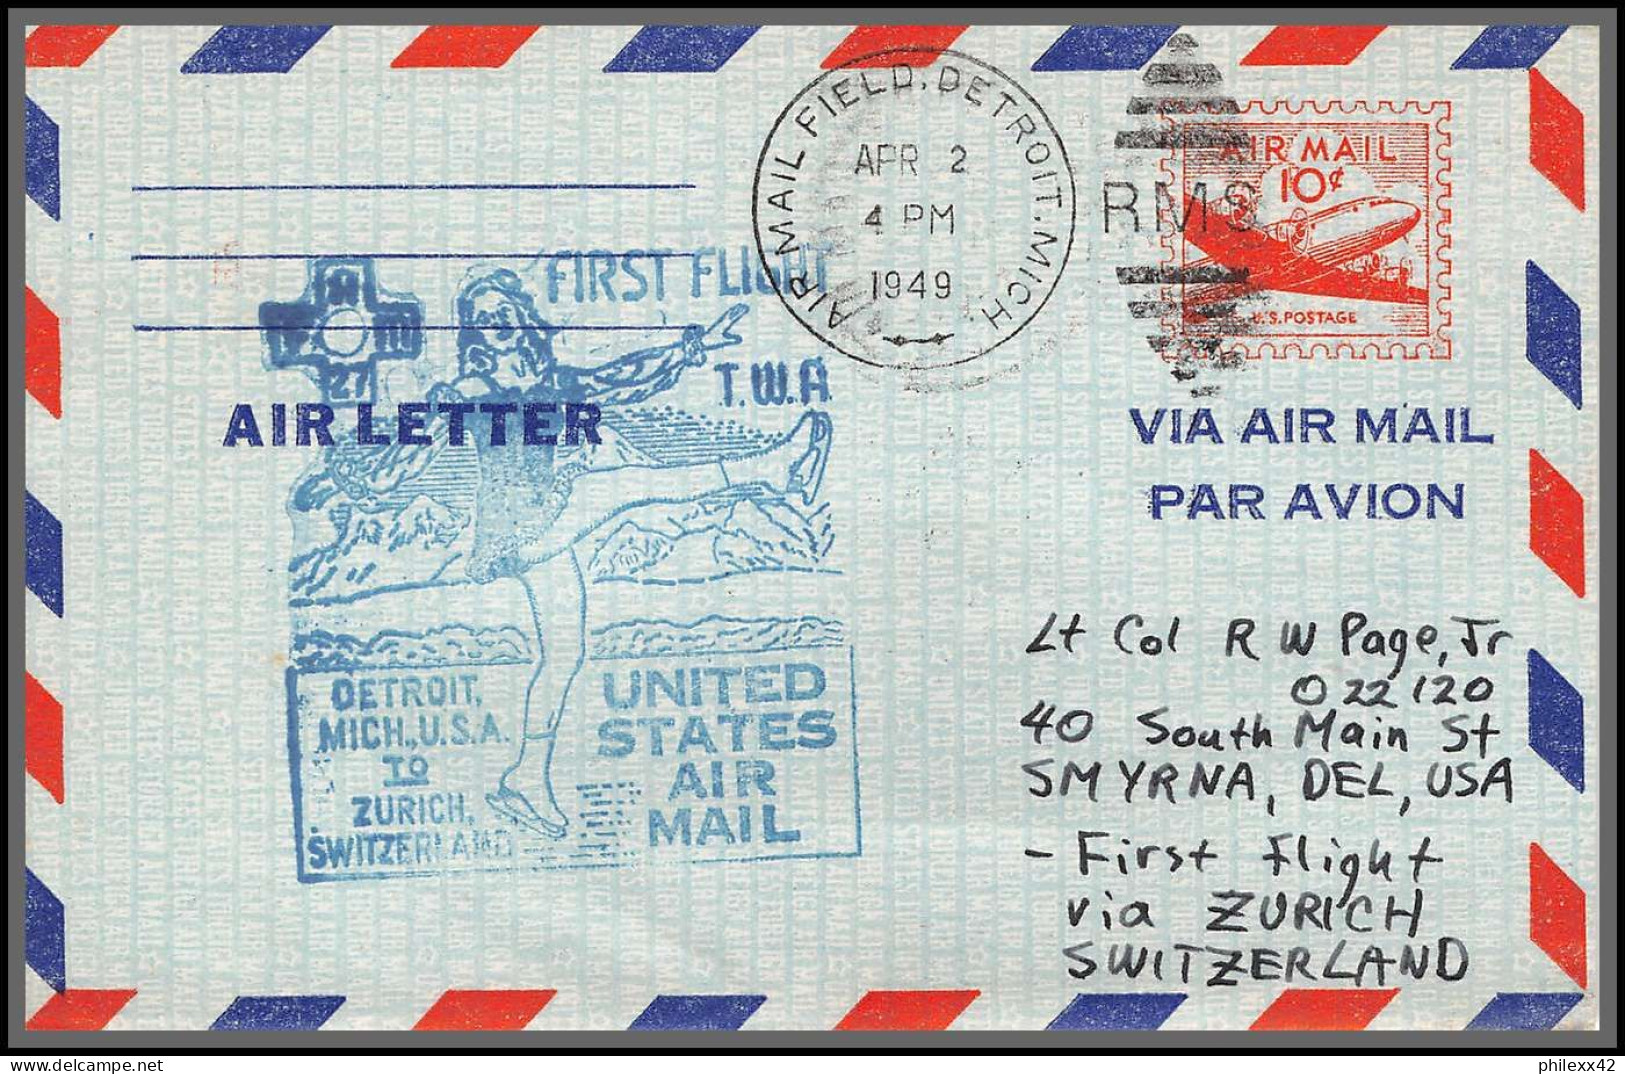 12206 lot 3 couleurs fam 27 detroit to zutich suisse helvetia 2/4/1949 premier vol first flight airmail stationery